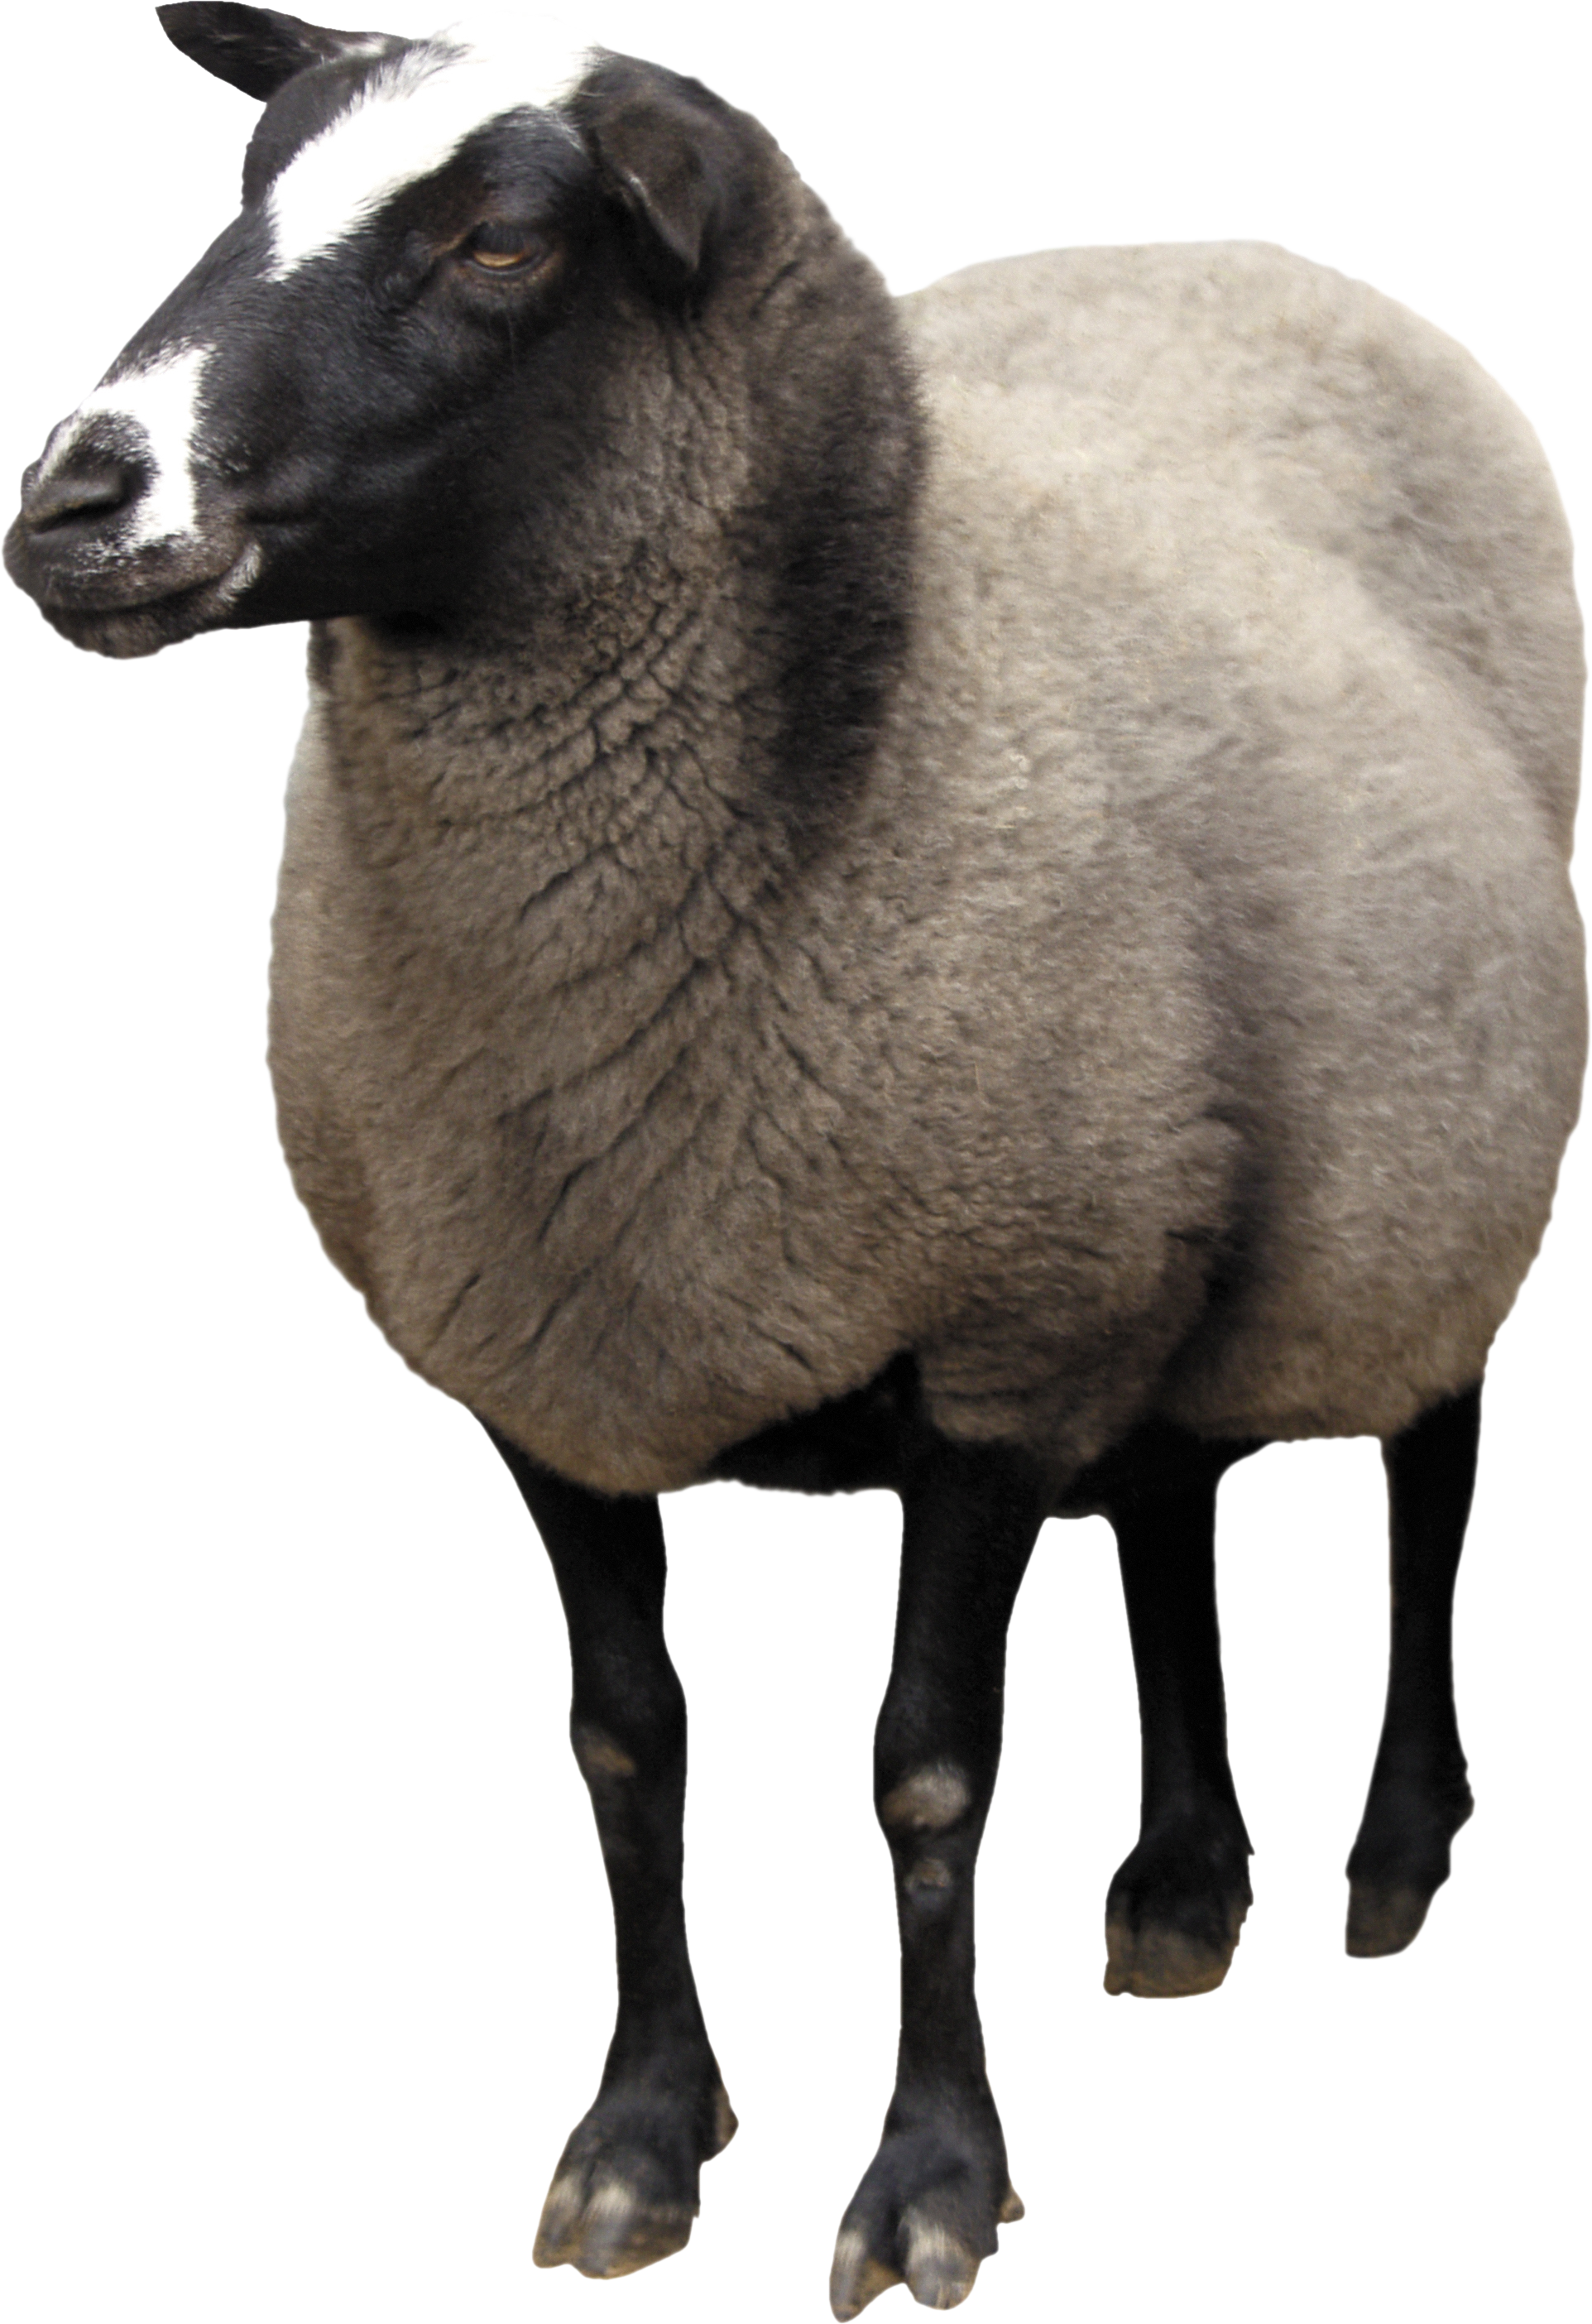 Sheep Png Image - Sheep, Transparent background PNG HD thumbnail